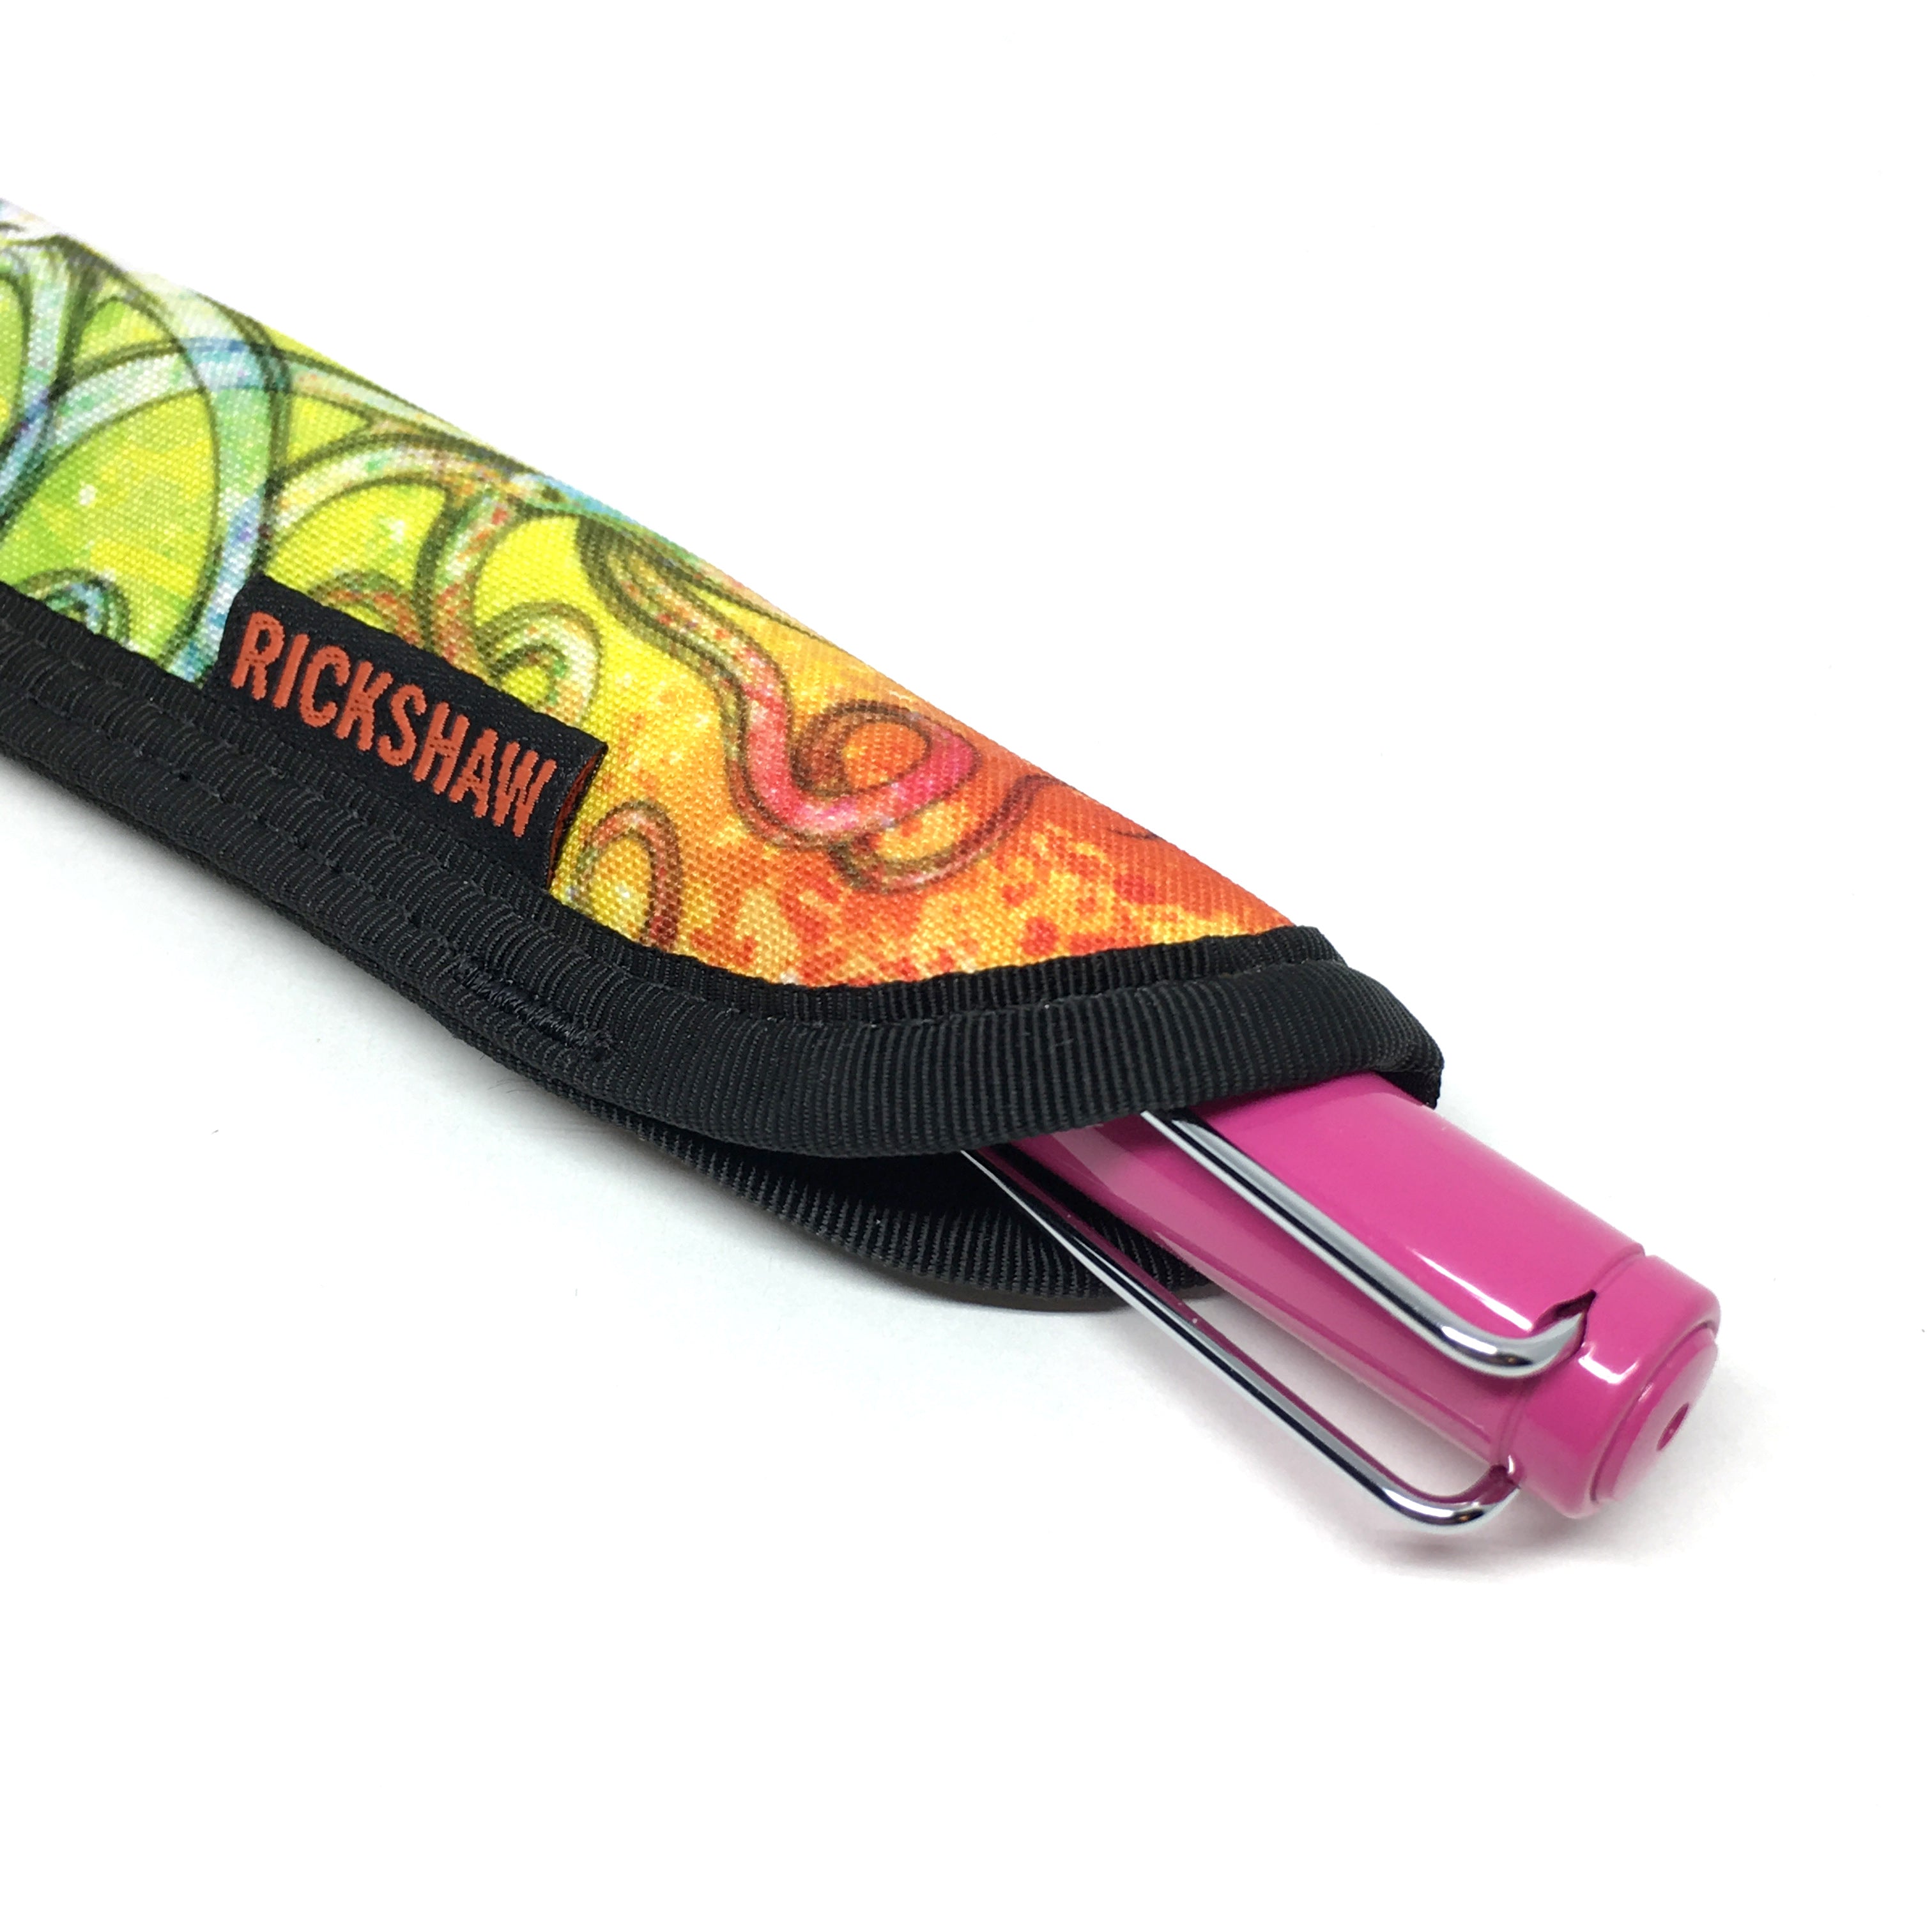 Rickshaw Bags x InkJournal Exclusive Inktopus Solo Pen Sleeve - Sorbet Squid